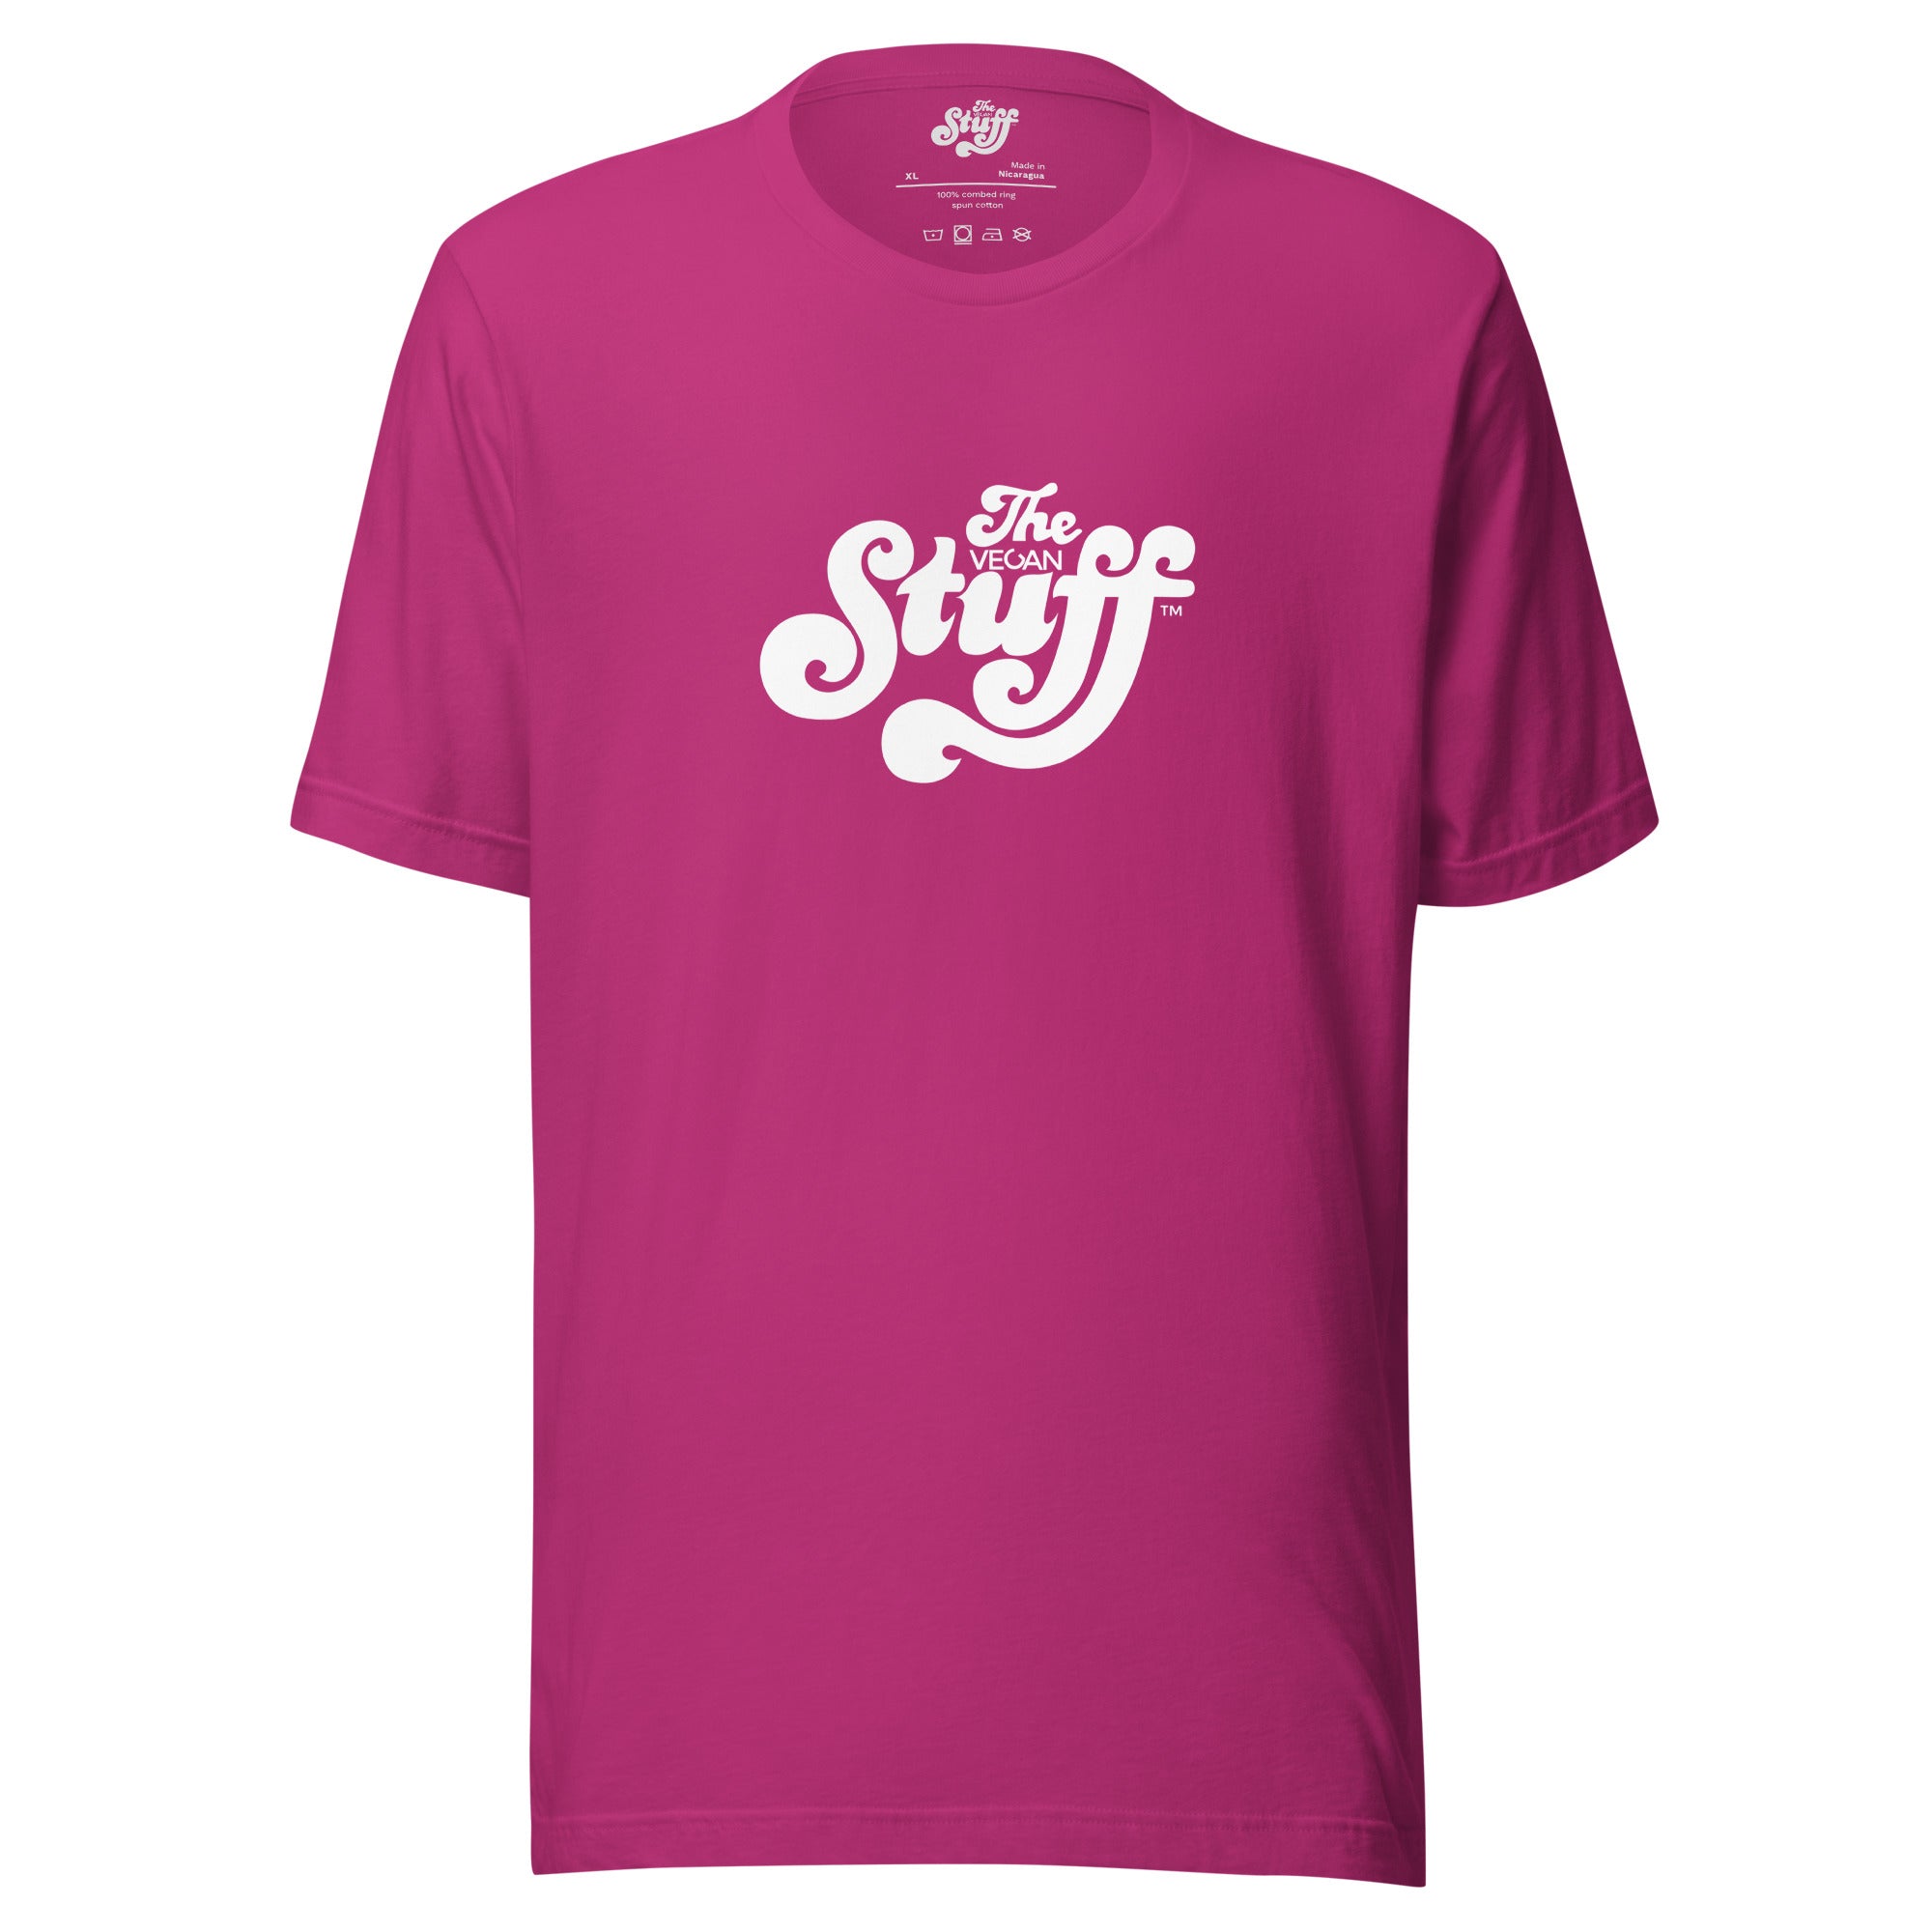 The Stuff T-shirt